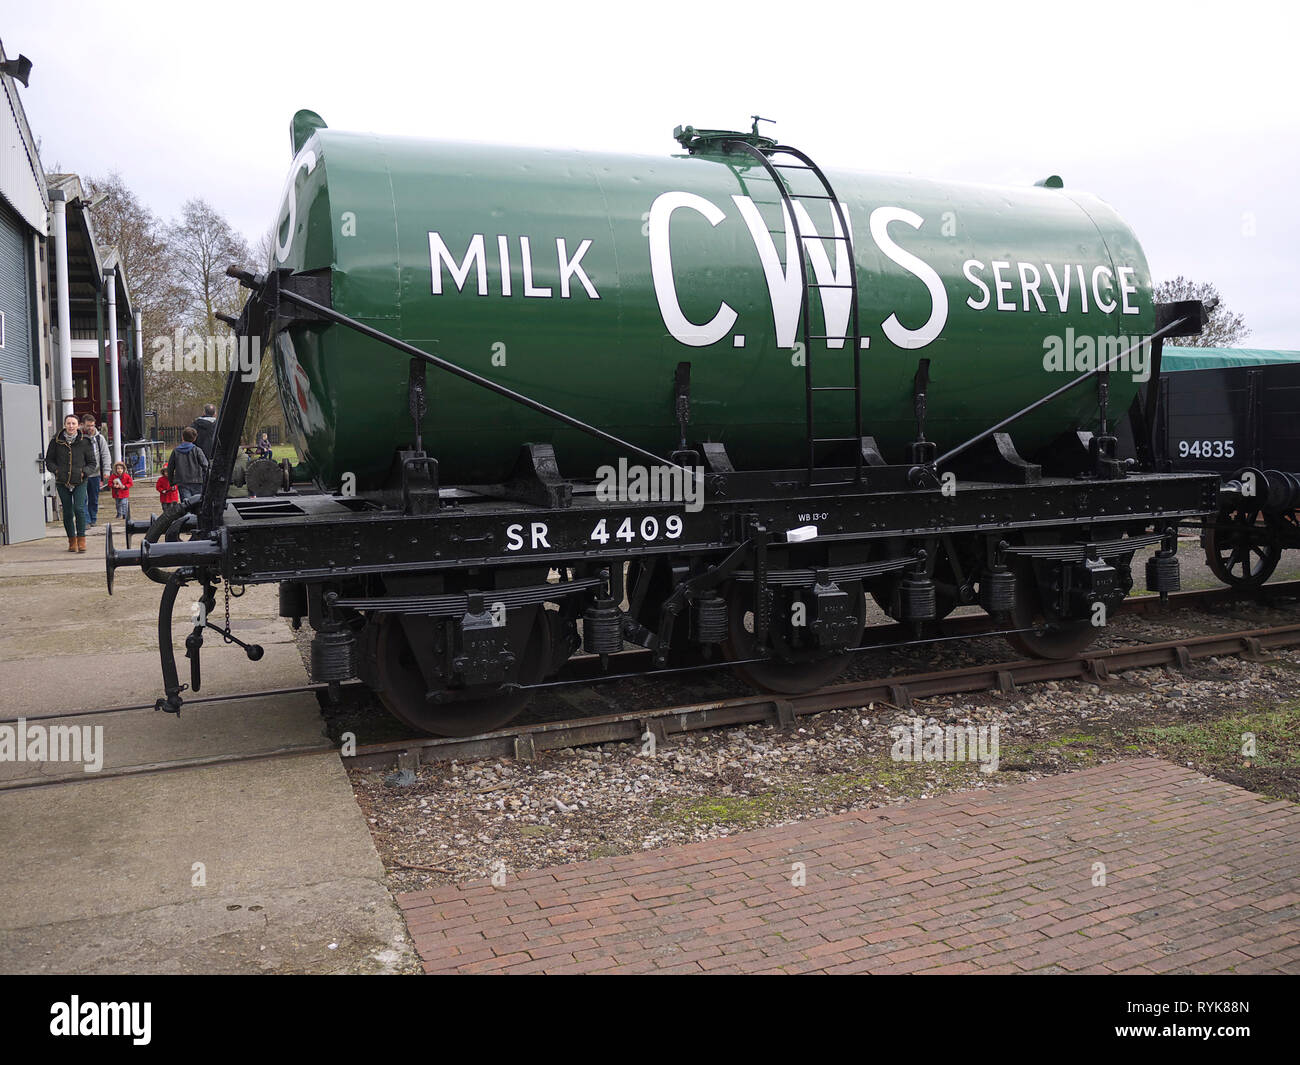 C.W.S. milk tanker, Didcot railway centre Stock Photo